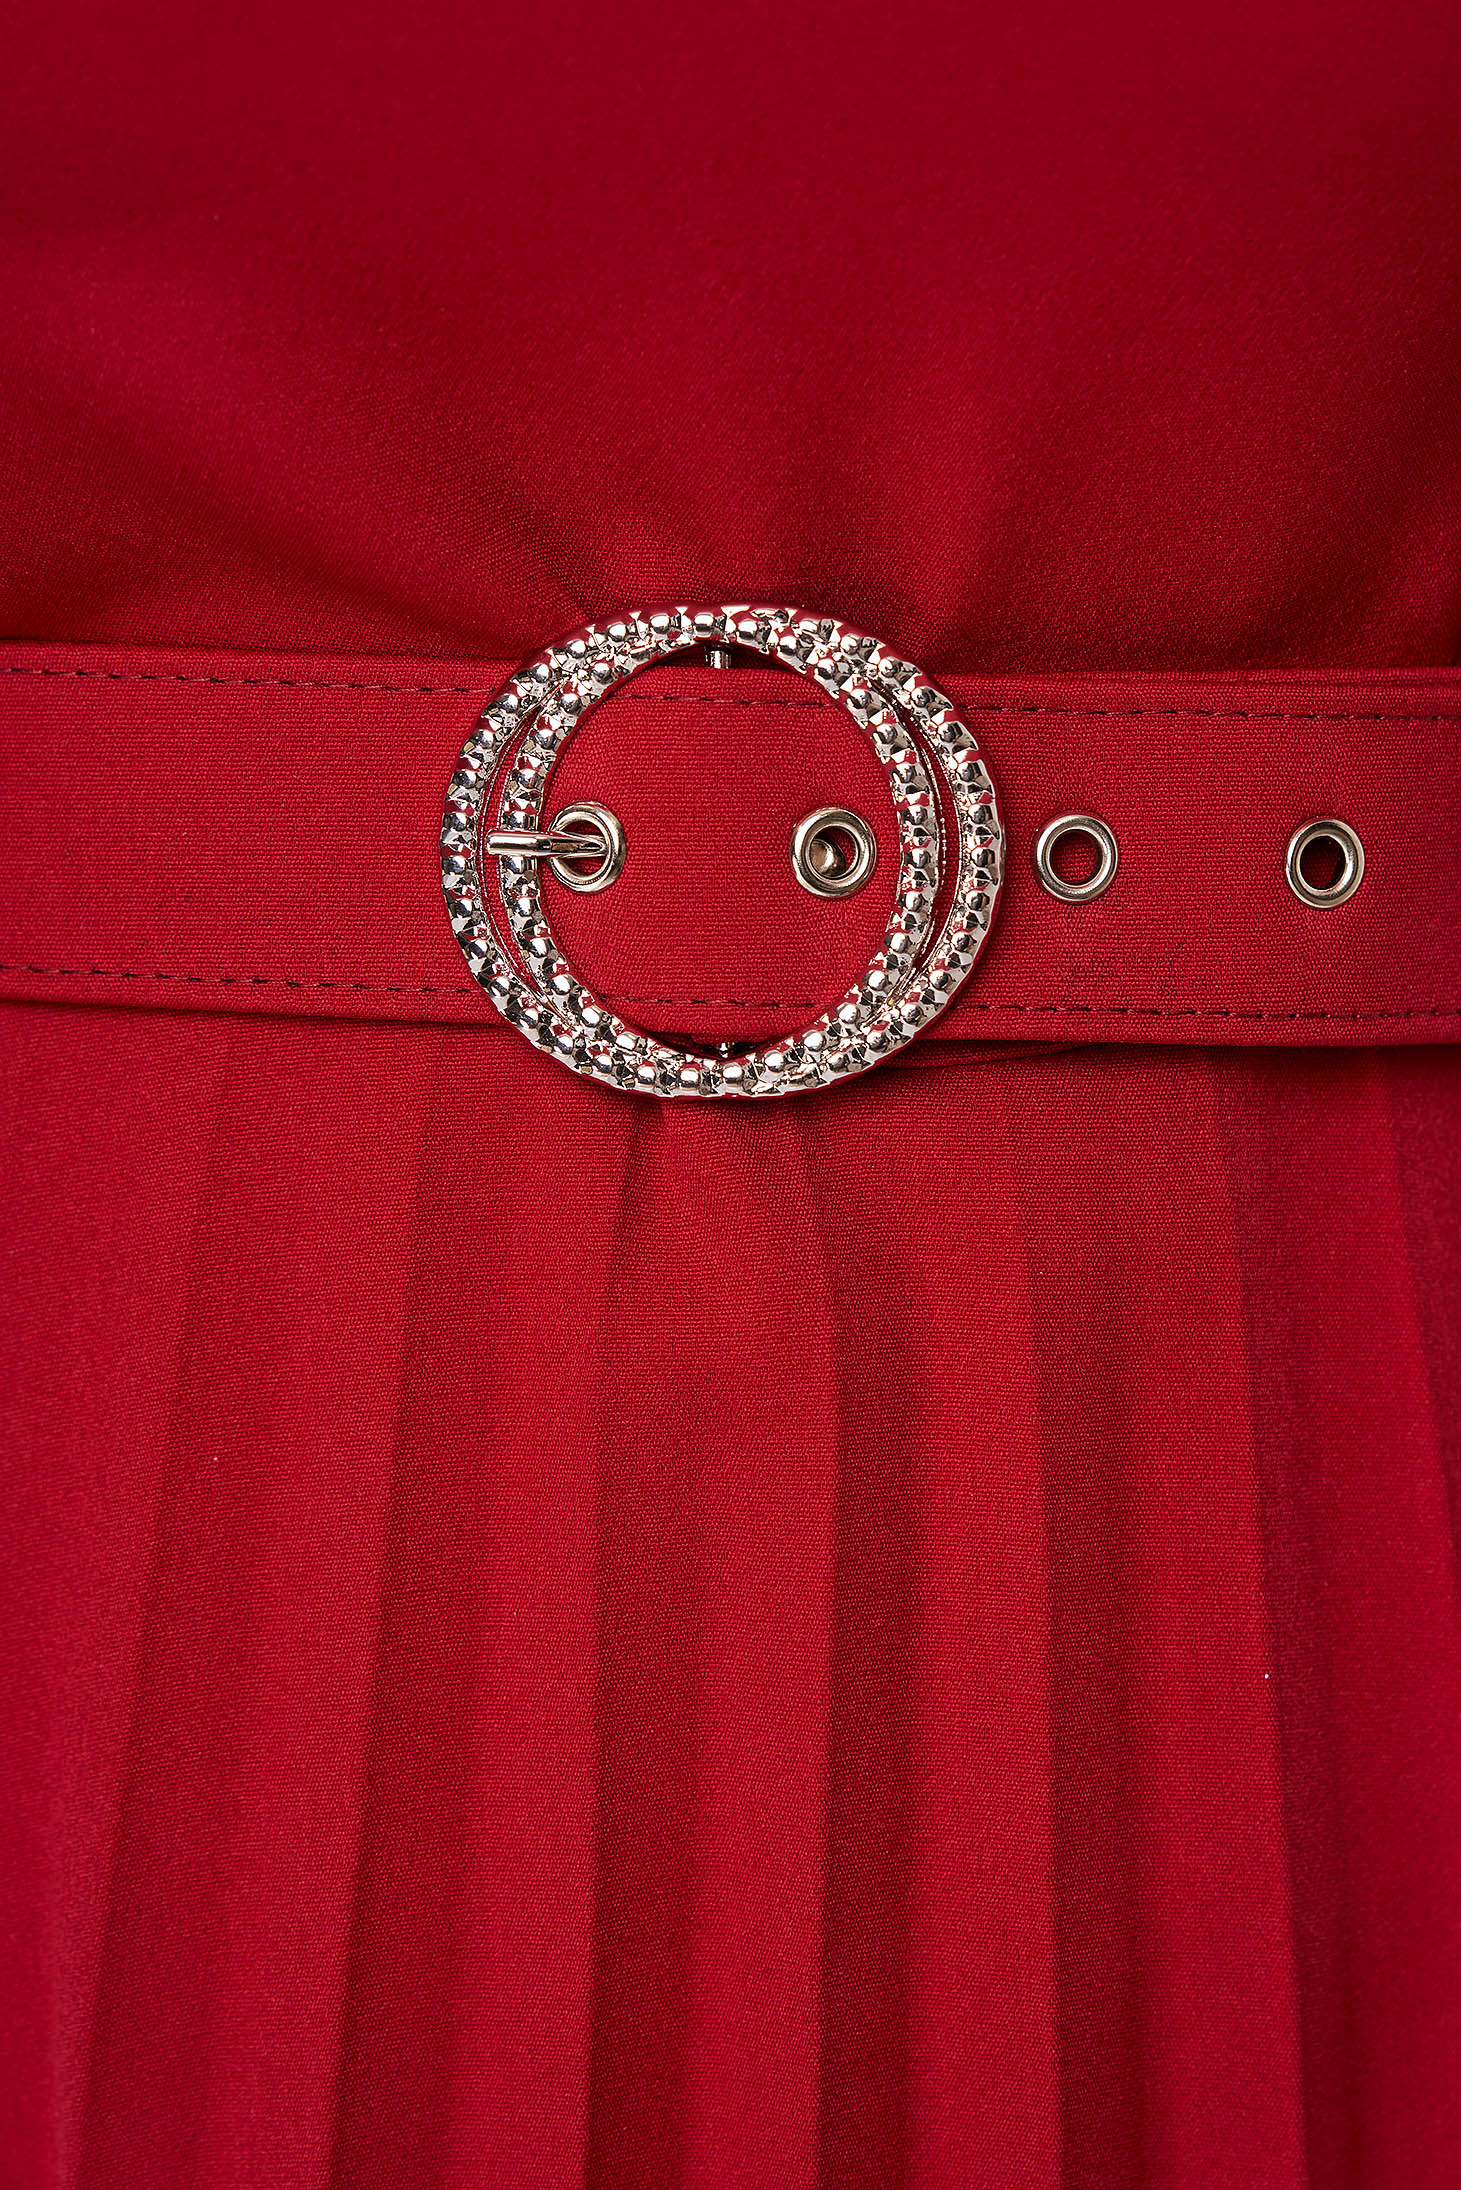 Rochie plisata din stofa usor elastica rosie in clos cu flori in relief pe manecile decupate 6 - StarShinerS.ro